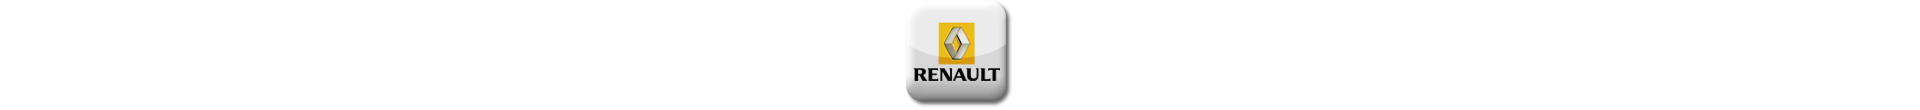 Boitier additionnel Renault Essence Evolussem